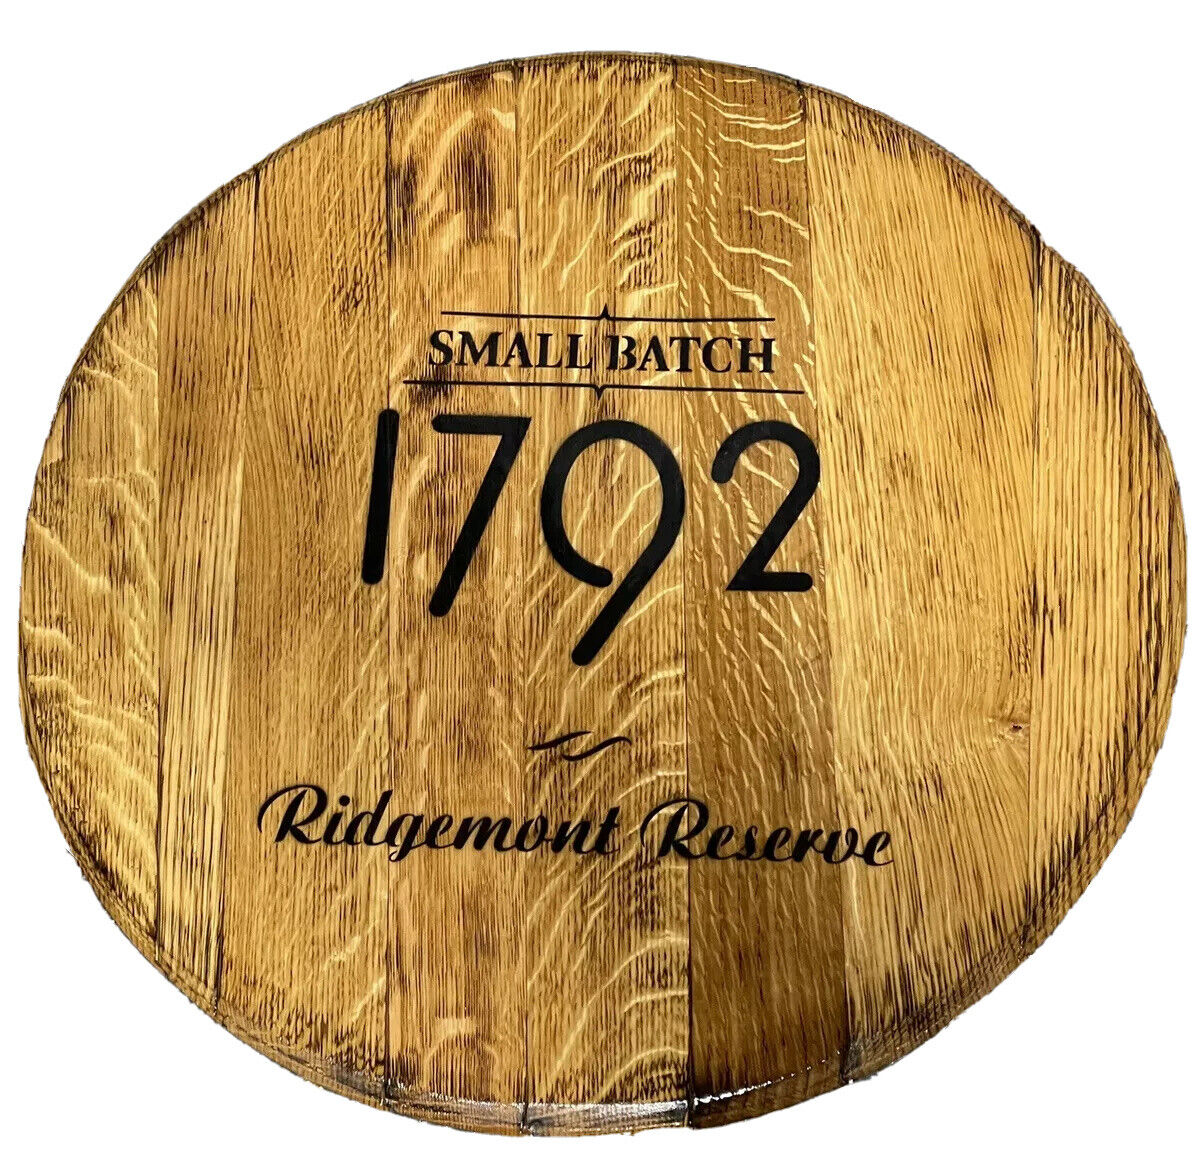 1792 Small Batch (Ridgemont Reserve) Bourbon Barrel Head 21” Diameter